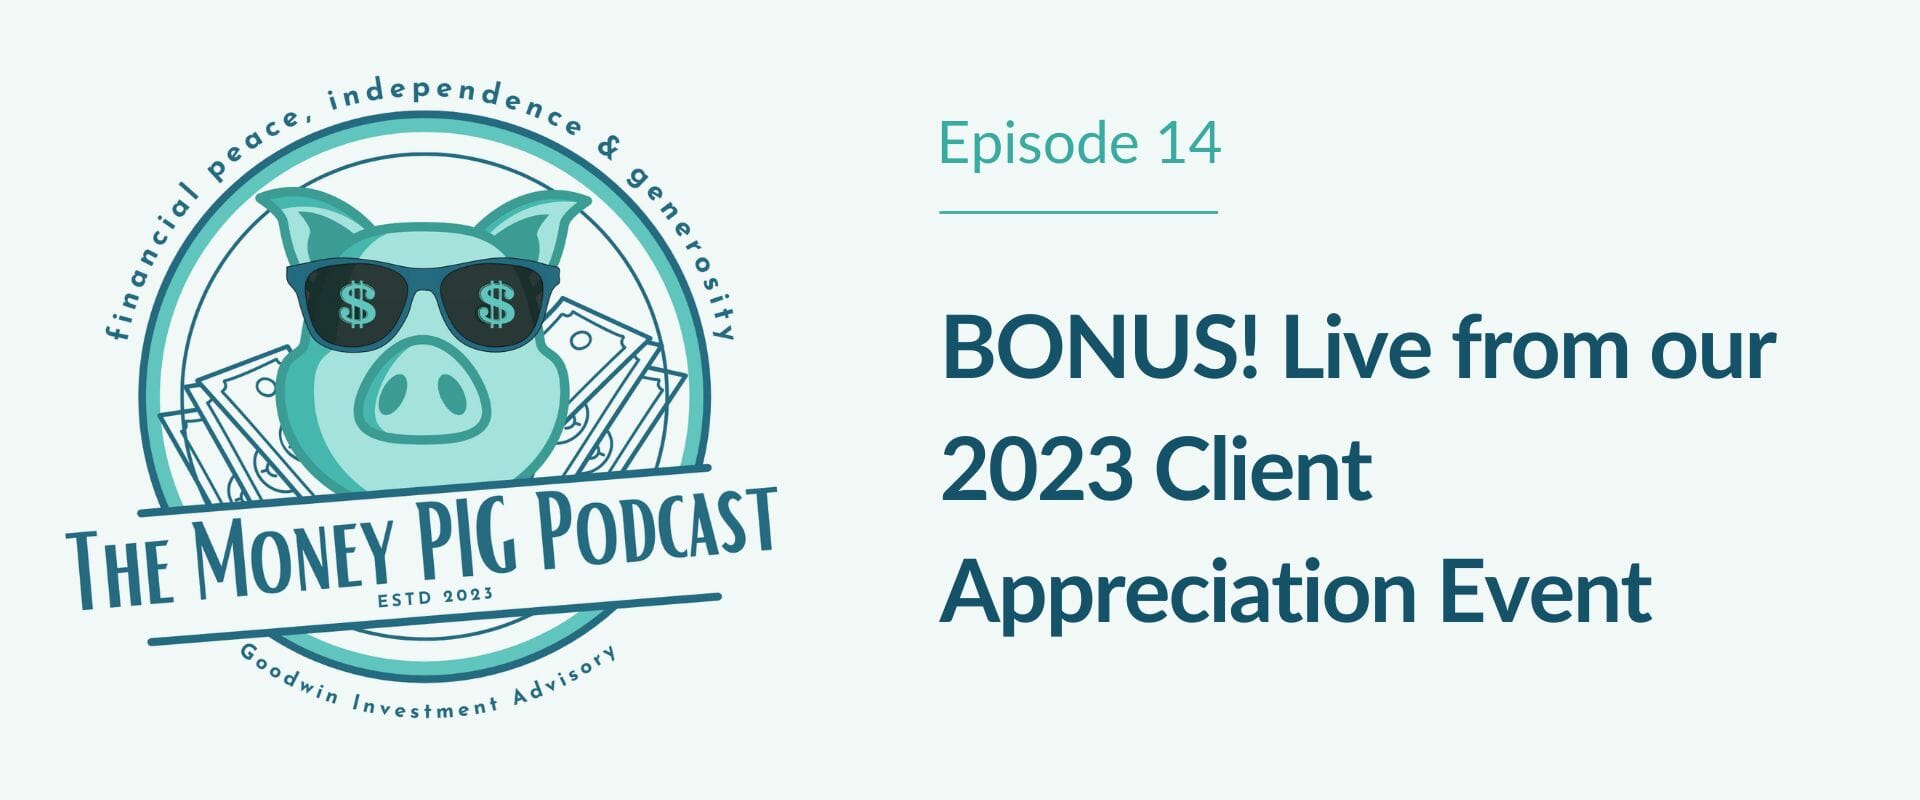 BONUS! Live from our 2023 Client Appreciation Event